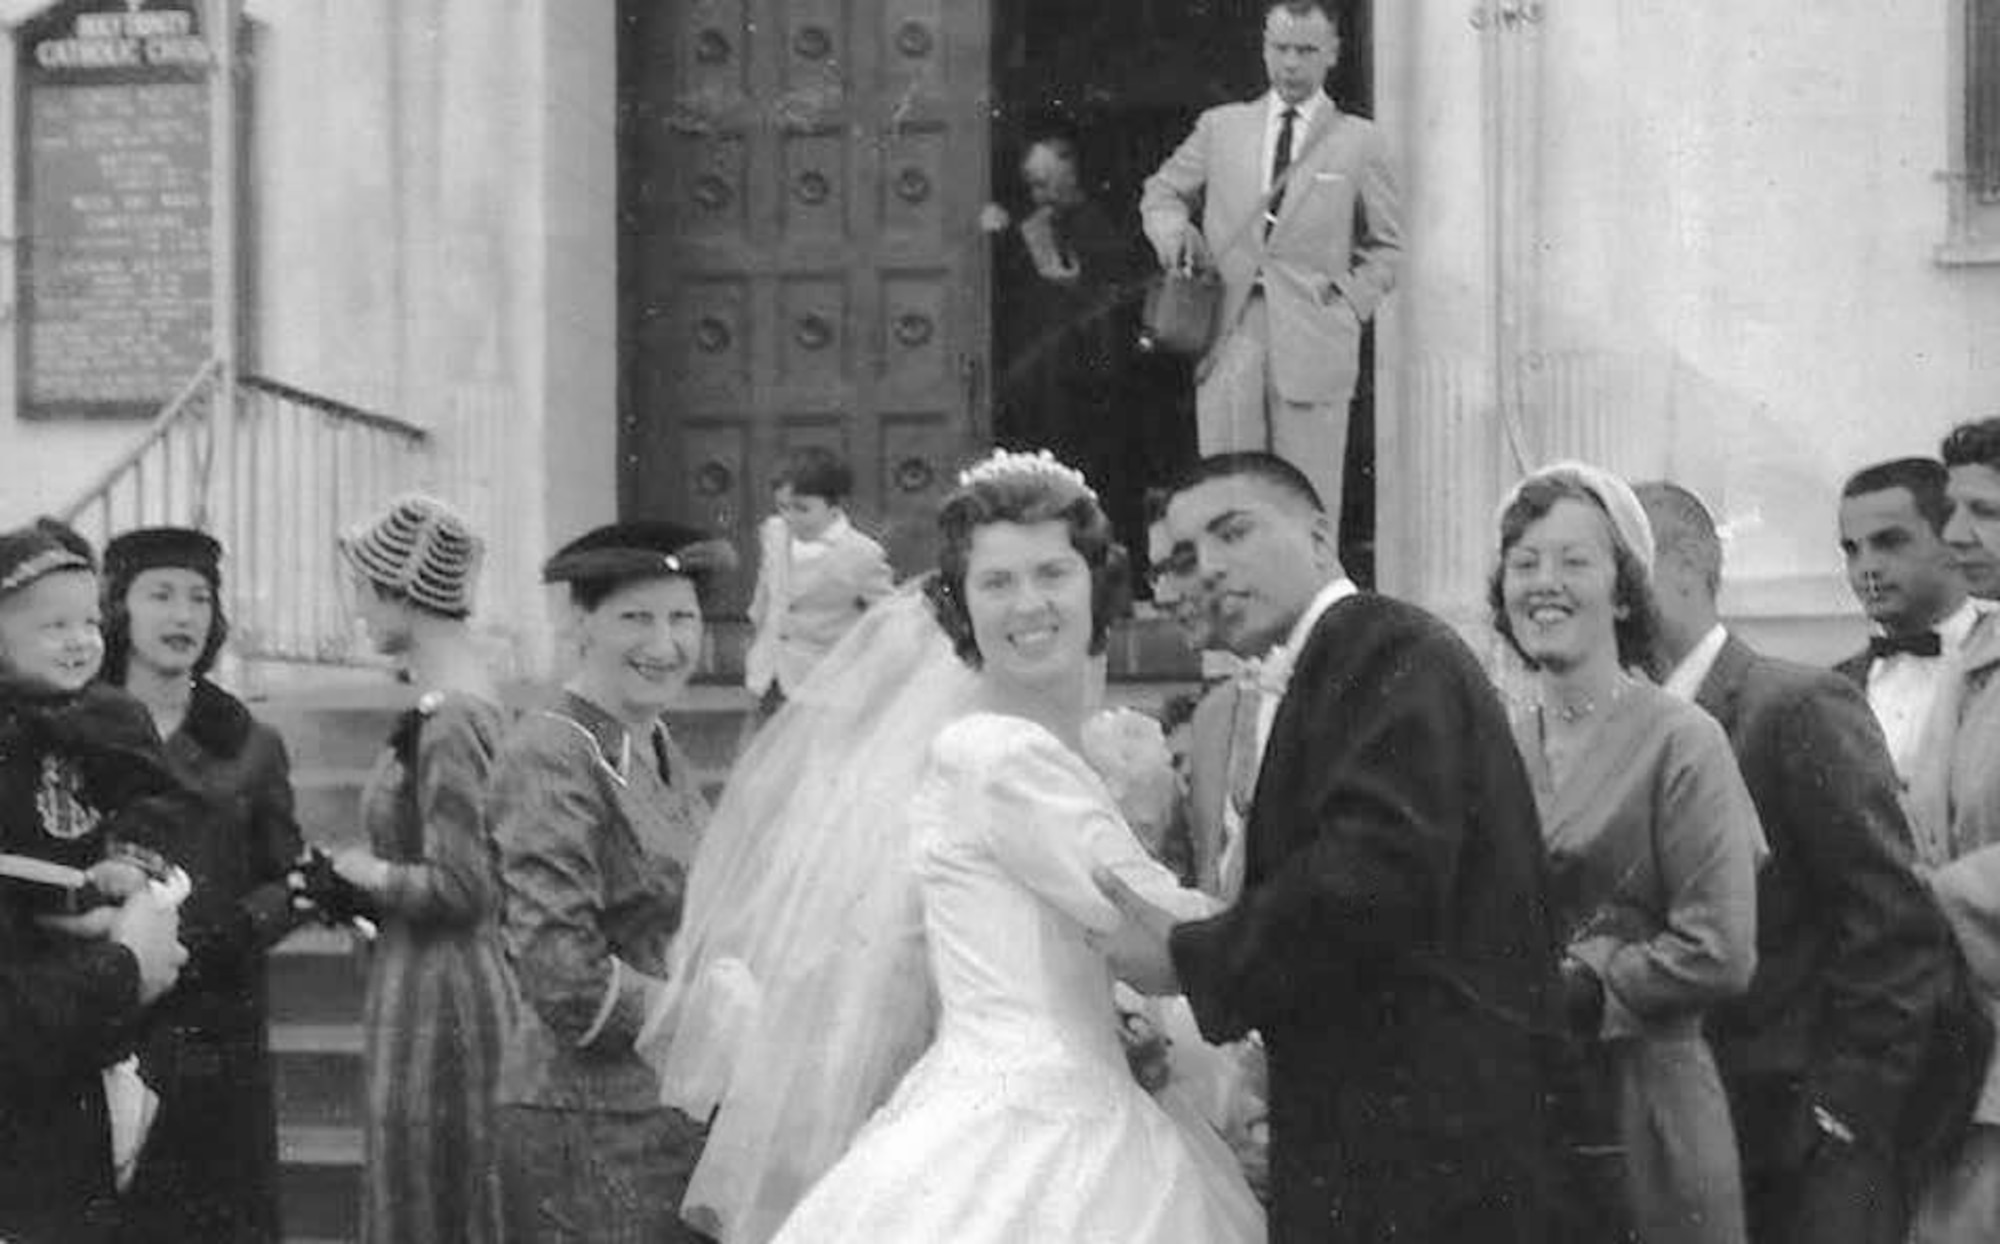 Kathleen and Bill's wedding day, December 28, 1957.